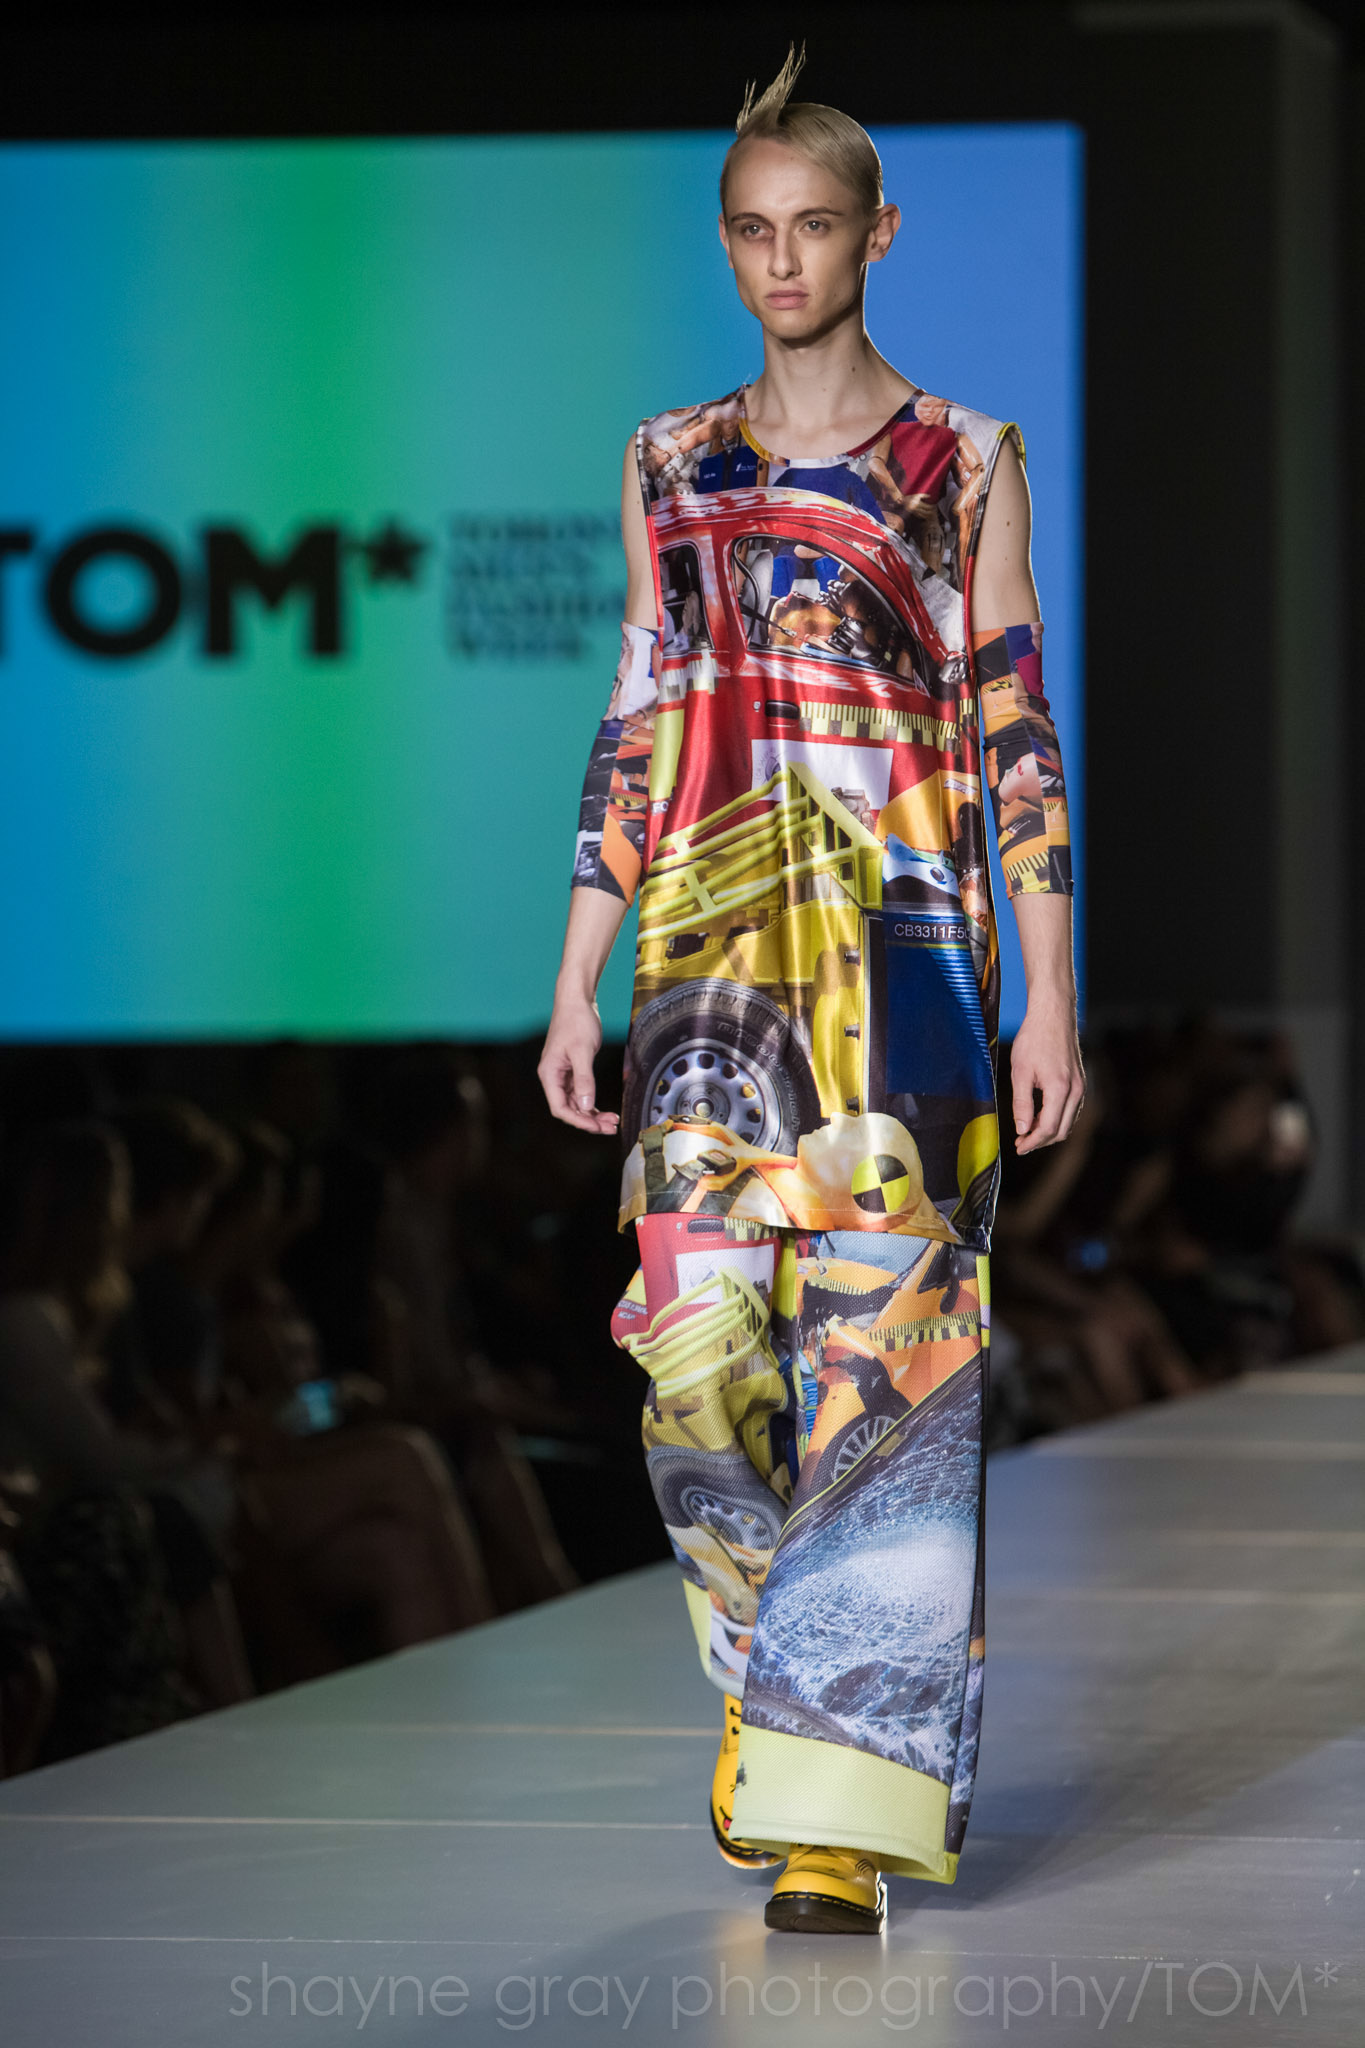 Shayne-Gray-Toronto-men's-fashion_week-TOM-lafaille-7577.jpg